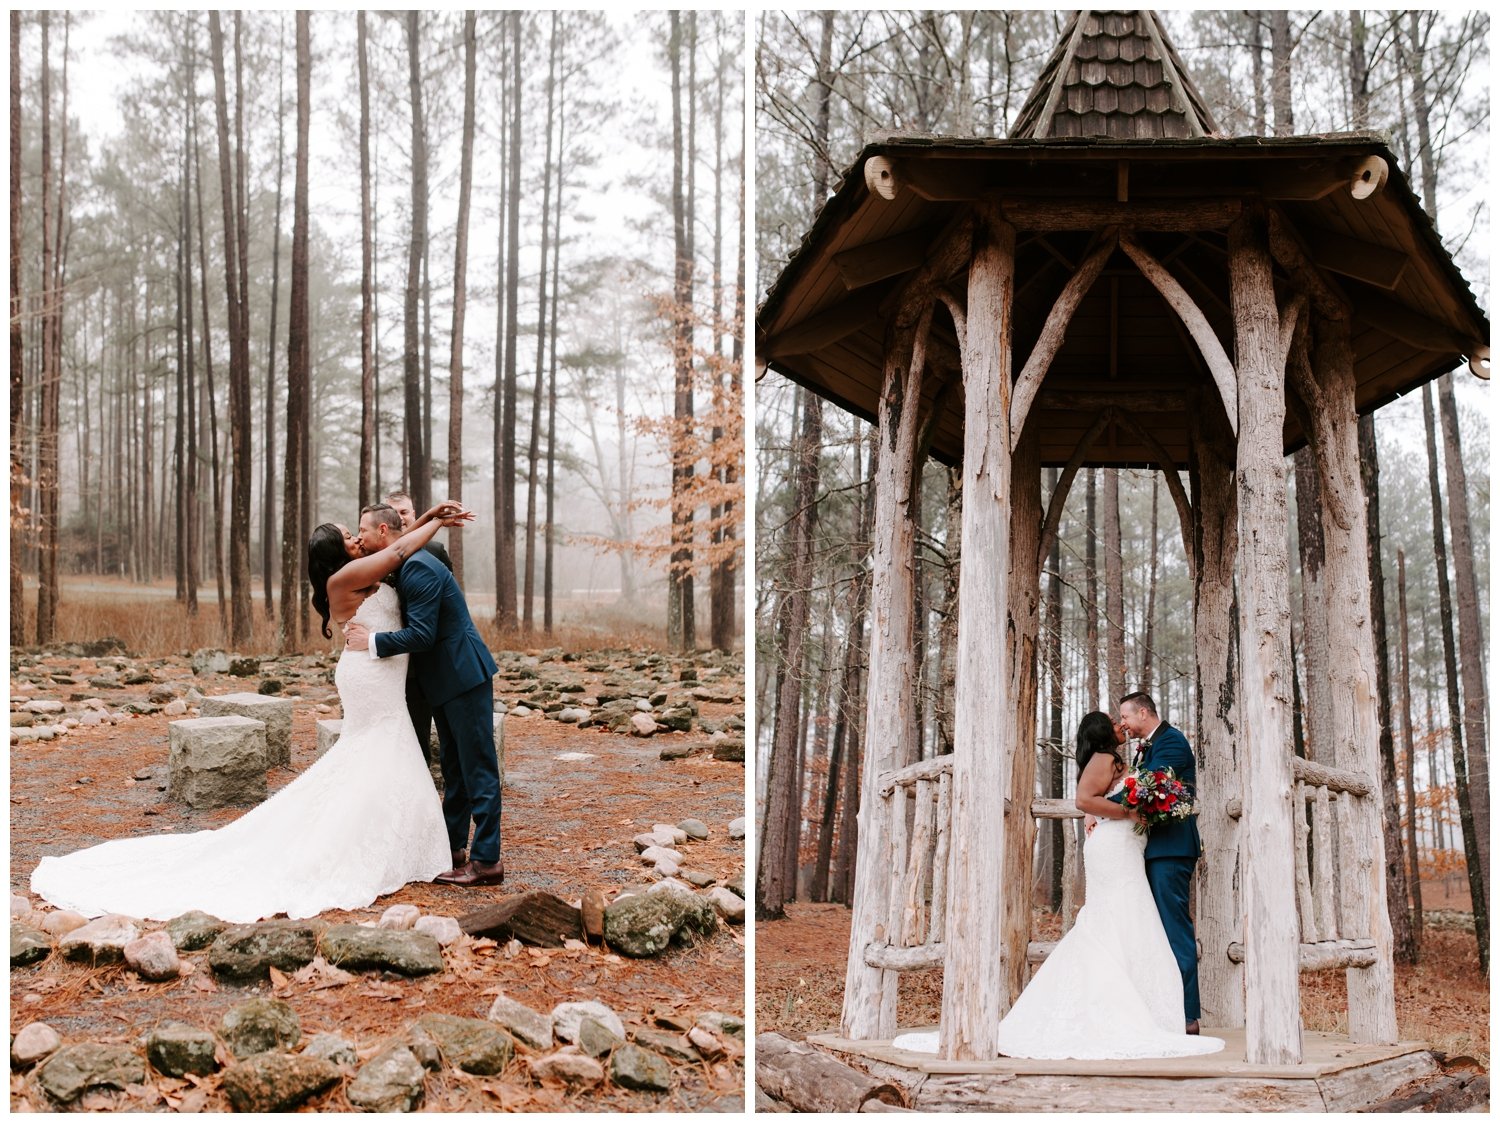 The couple explores one of the luxury wedding venues in Atlanta